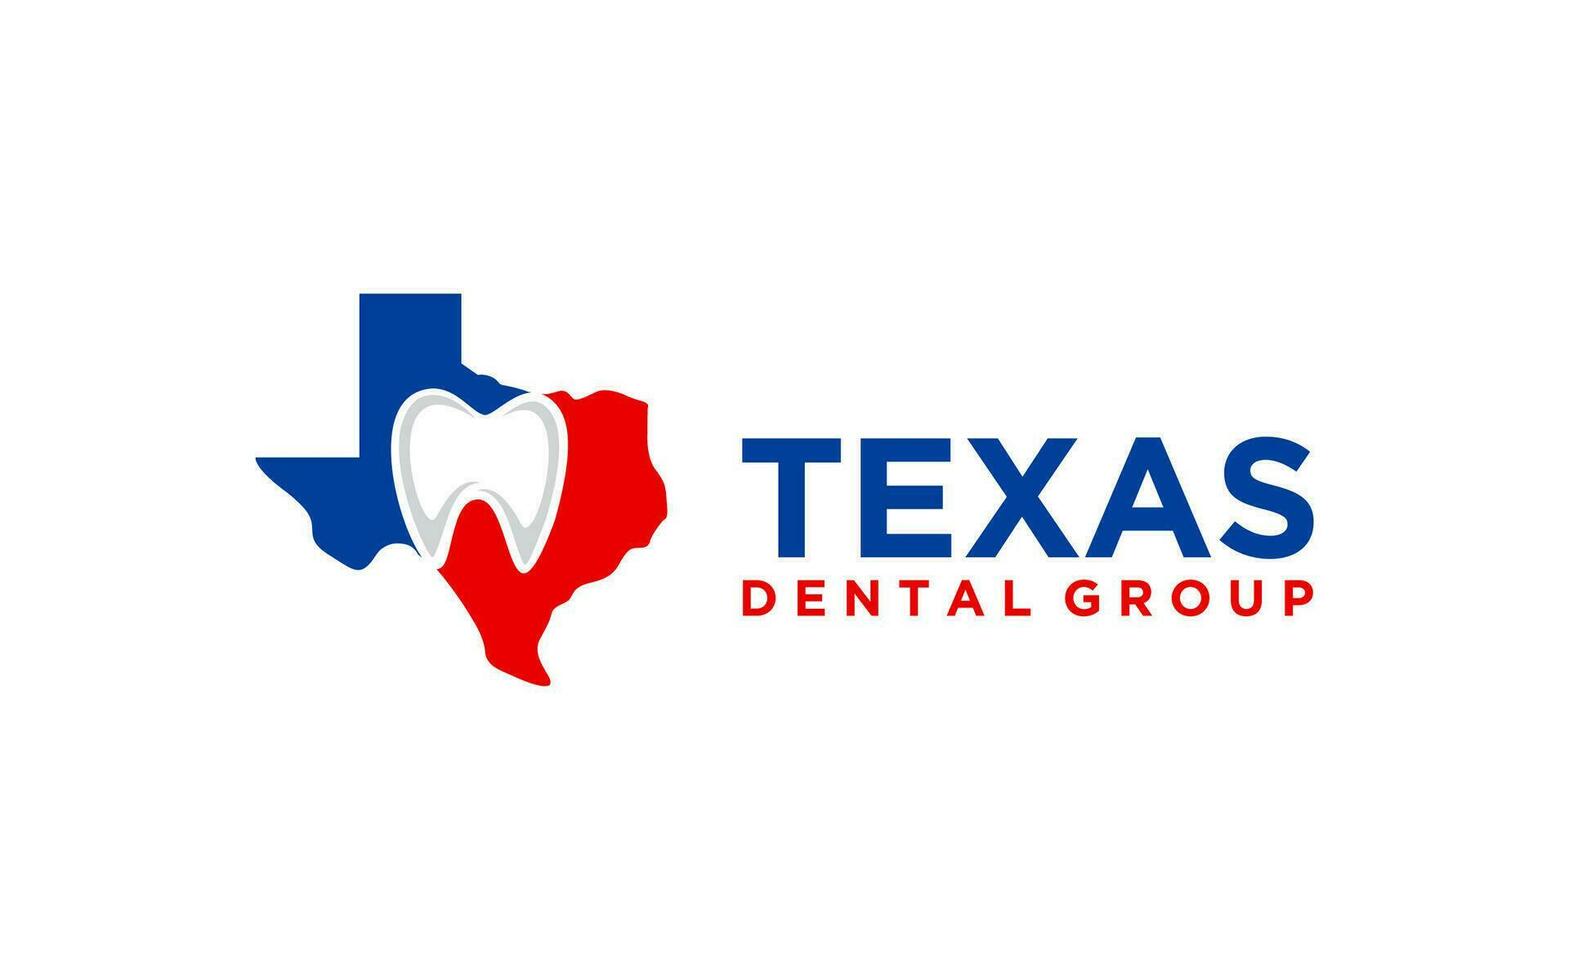 Texas dentale cura logo design vettore